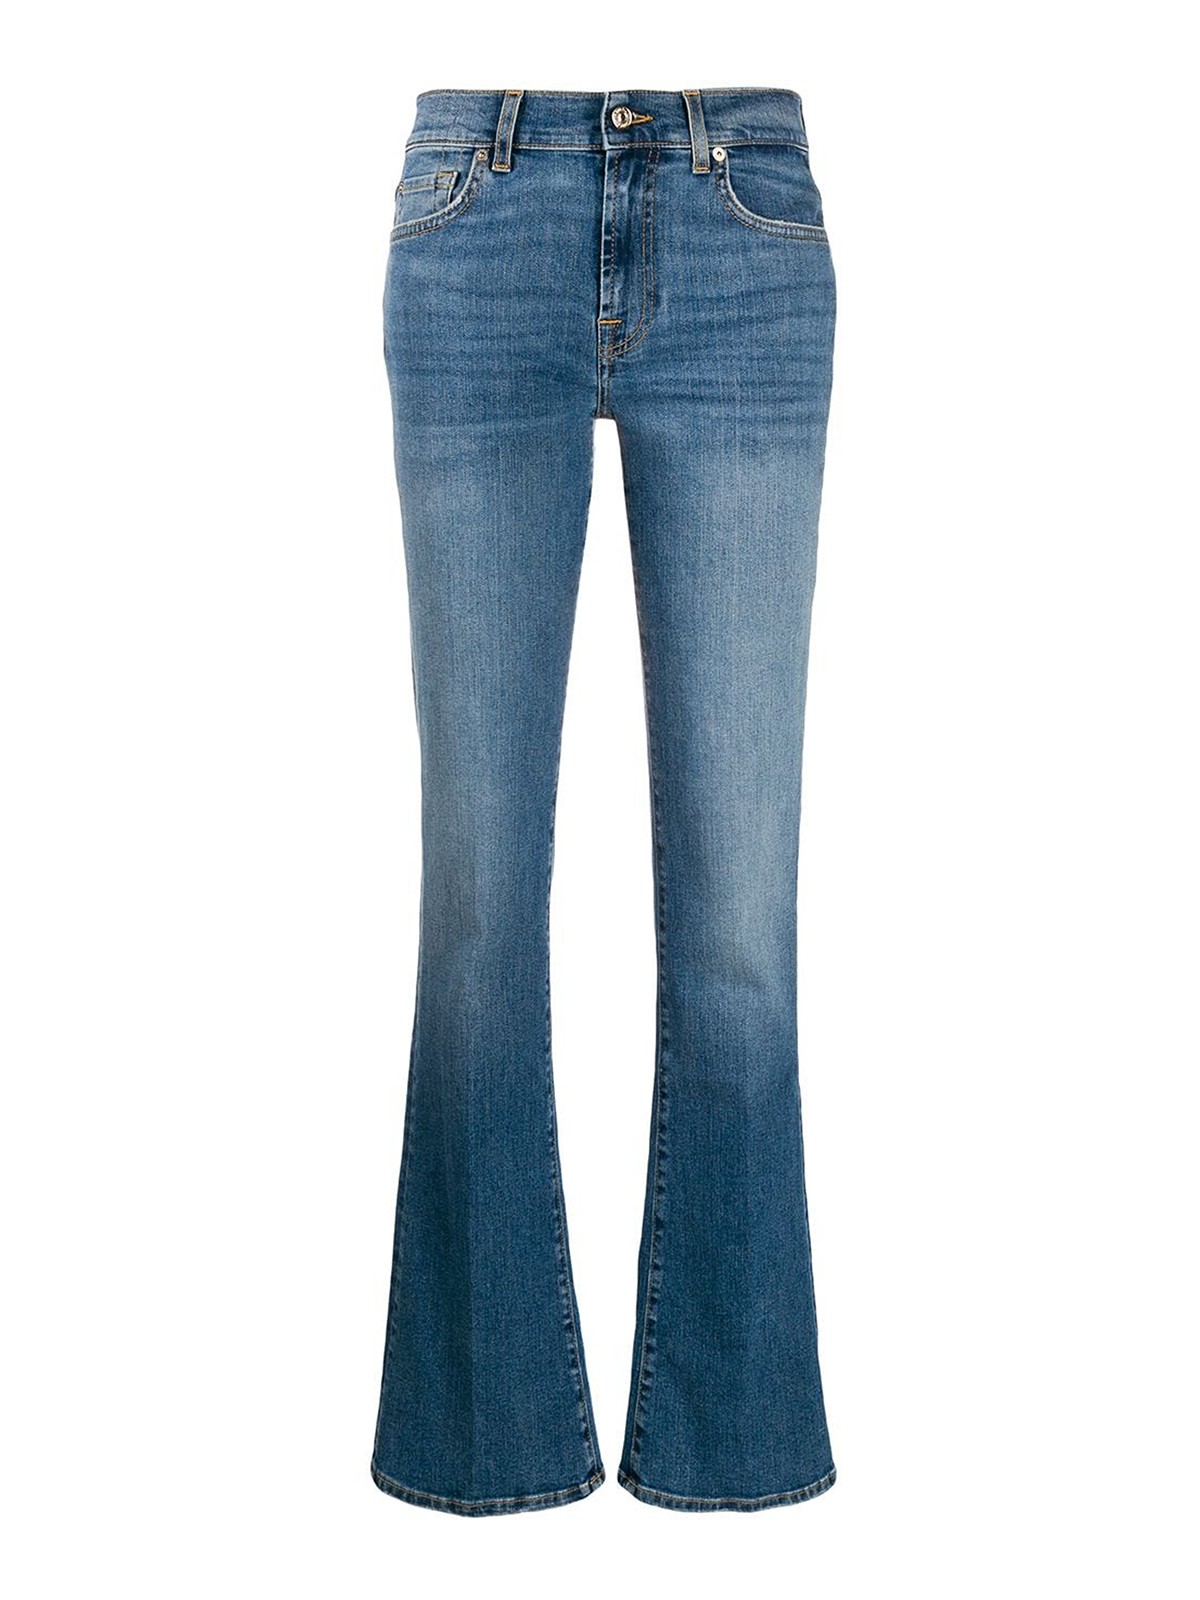 Straight leg Seven - blue cotton blend flared style jeans - JSWB44A0NTLIGHTBLUE